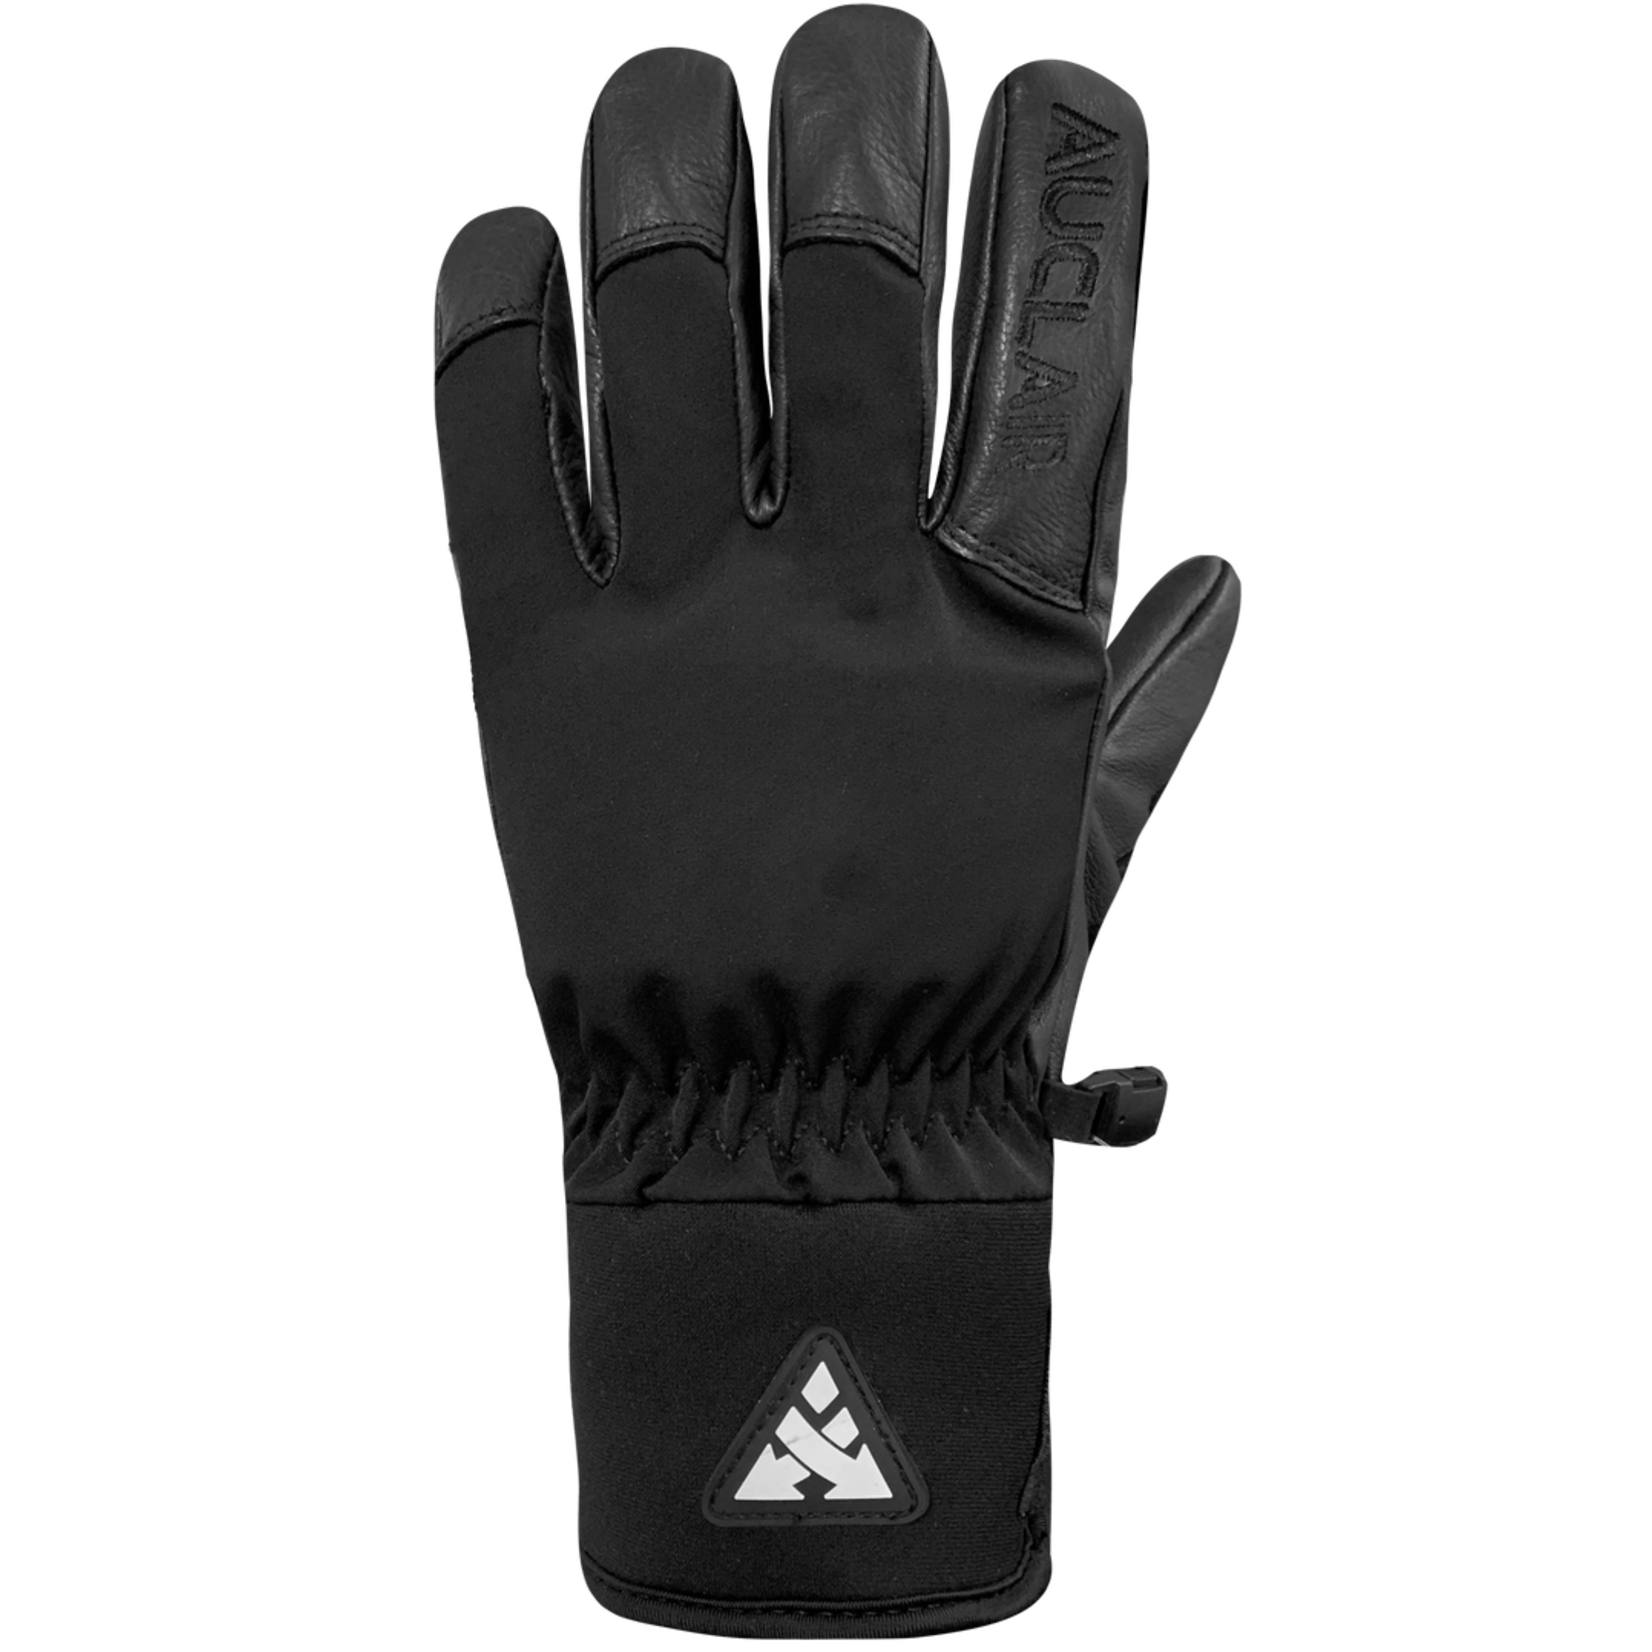 Auclair Auclair Team Worker 2 Glove